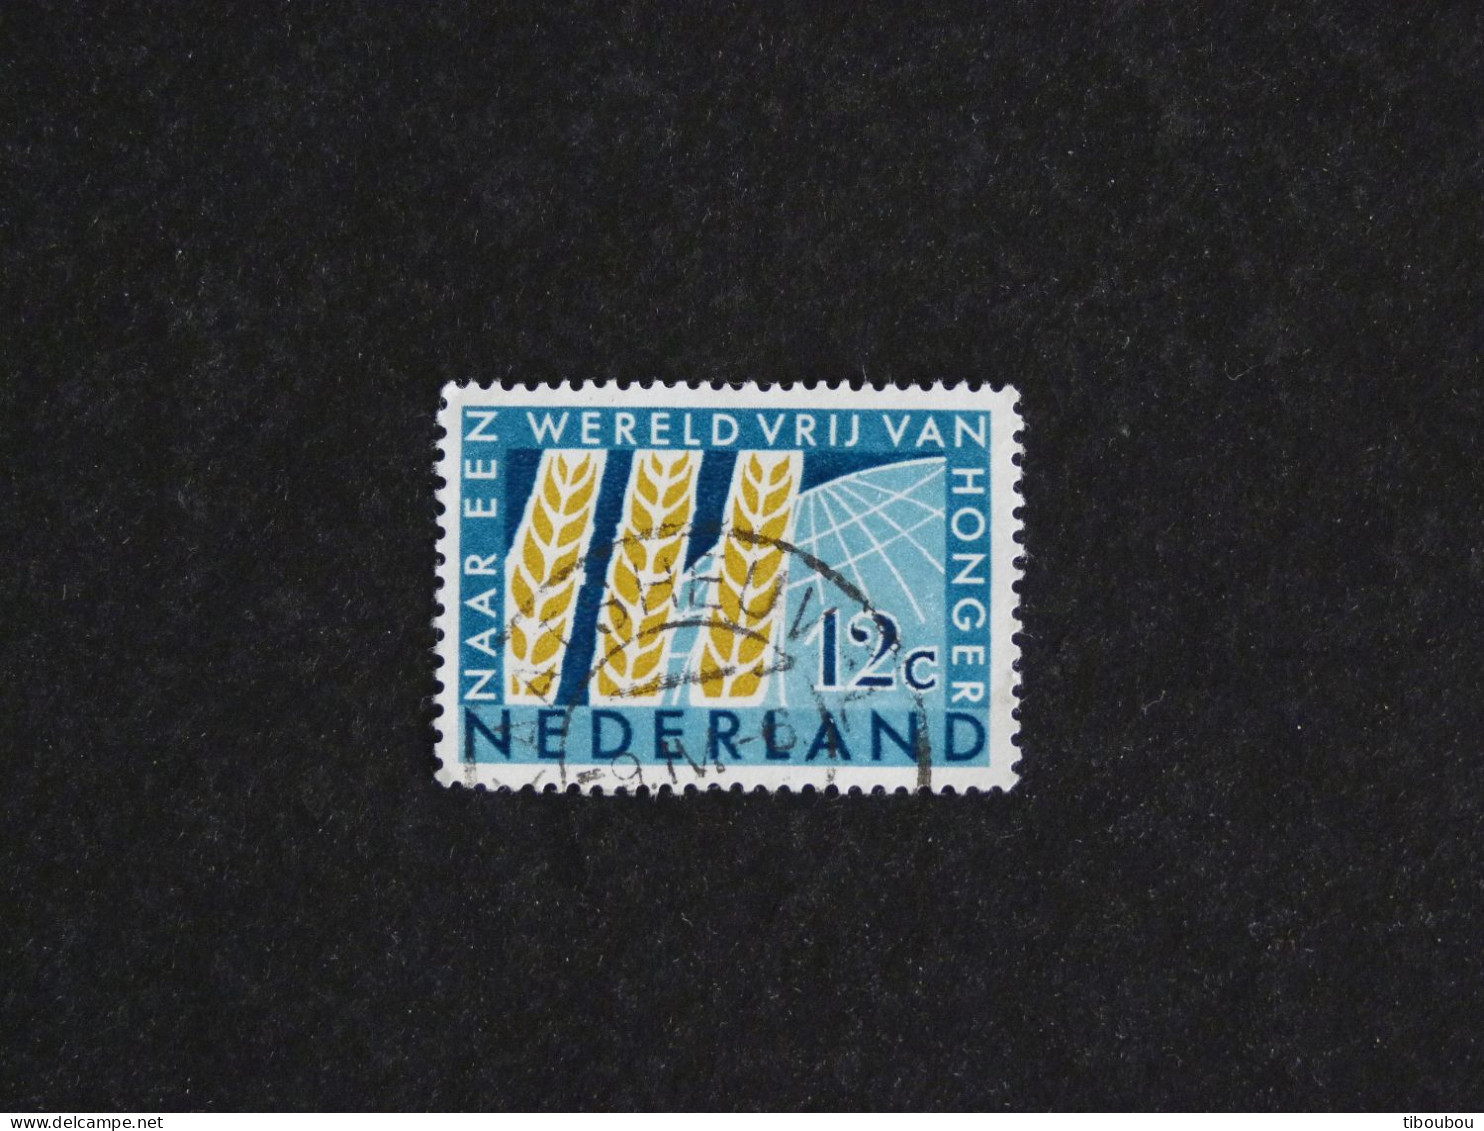 PAYS BAS NEDERLAND YT 767 OBLITERE - CAMPAGNE MONDIALE CONTRE LA FAIM - Used Stamps